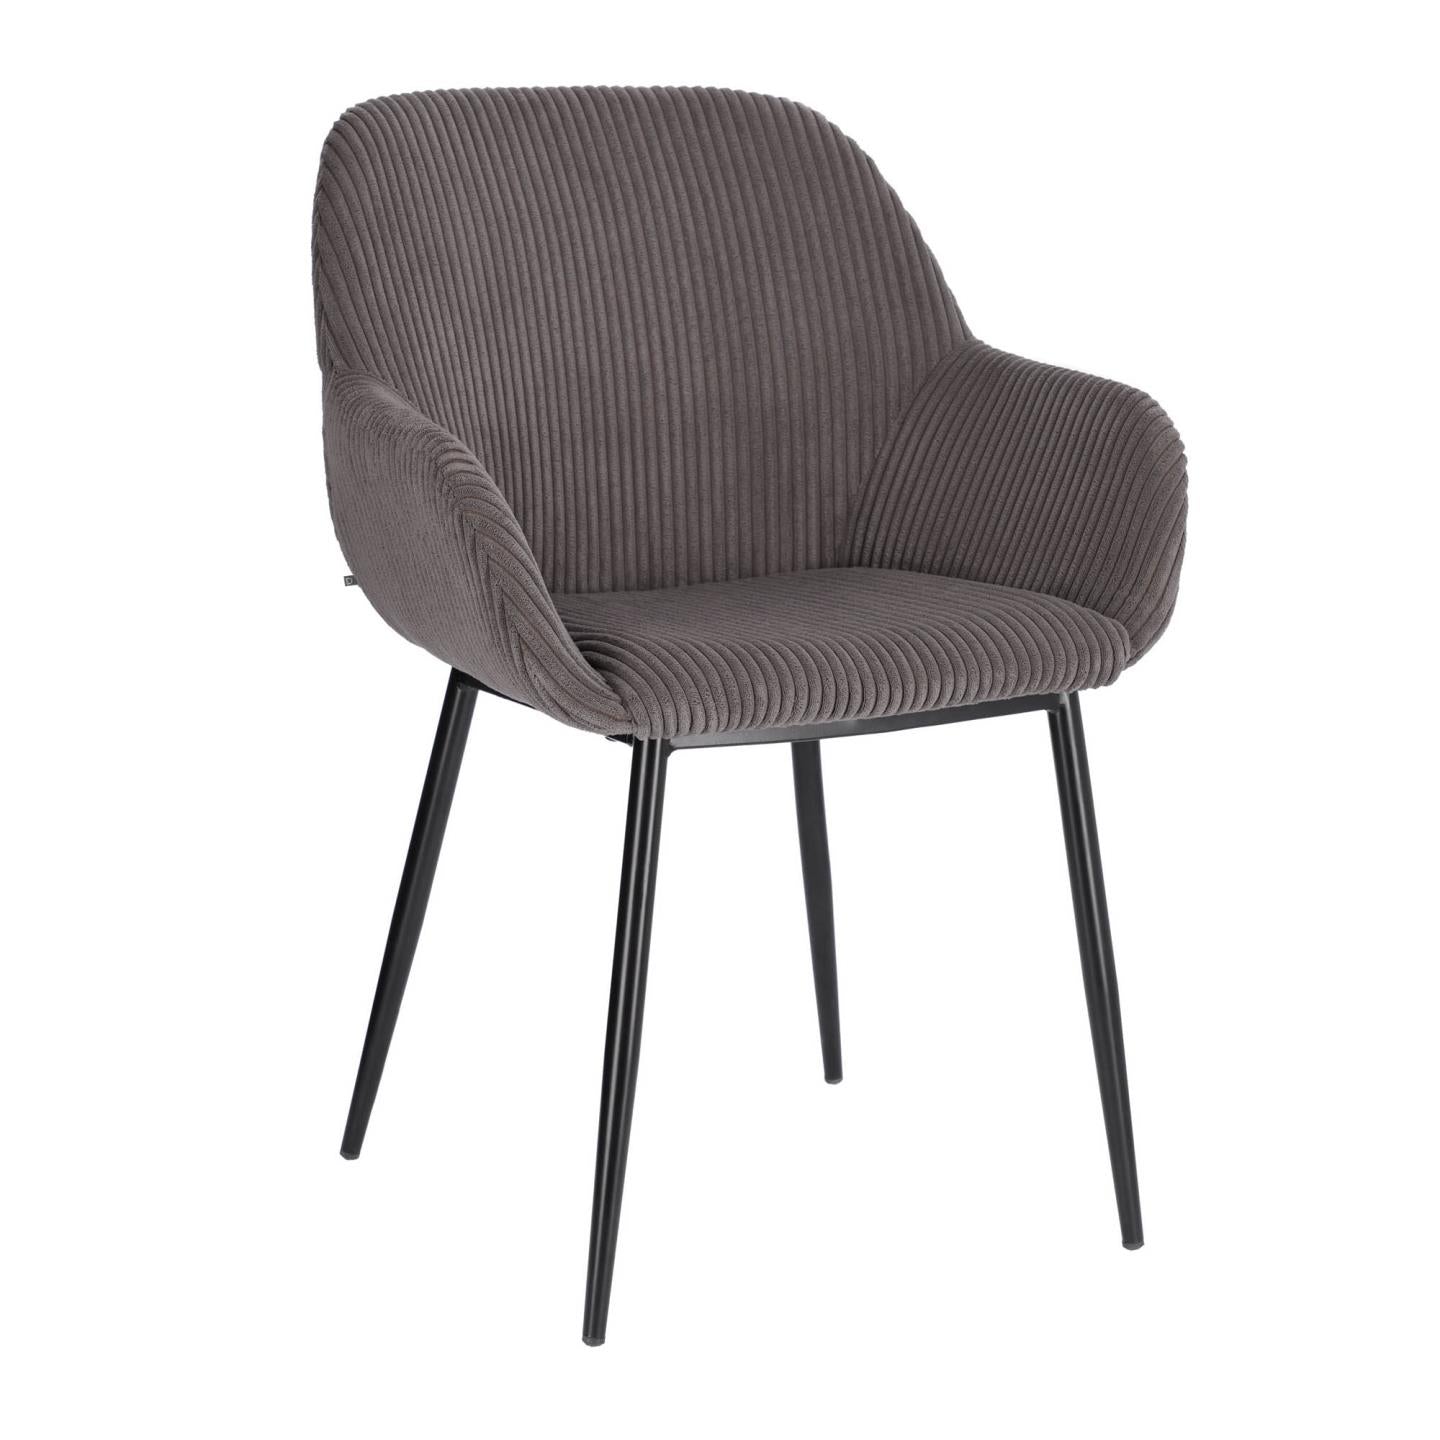 Konna chair in grey wide seam corduroy